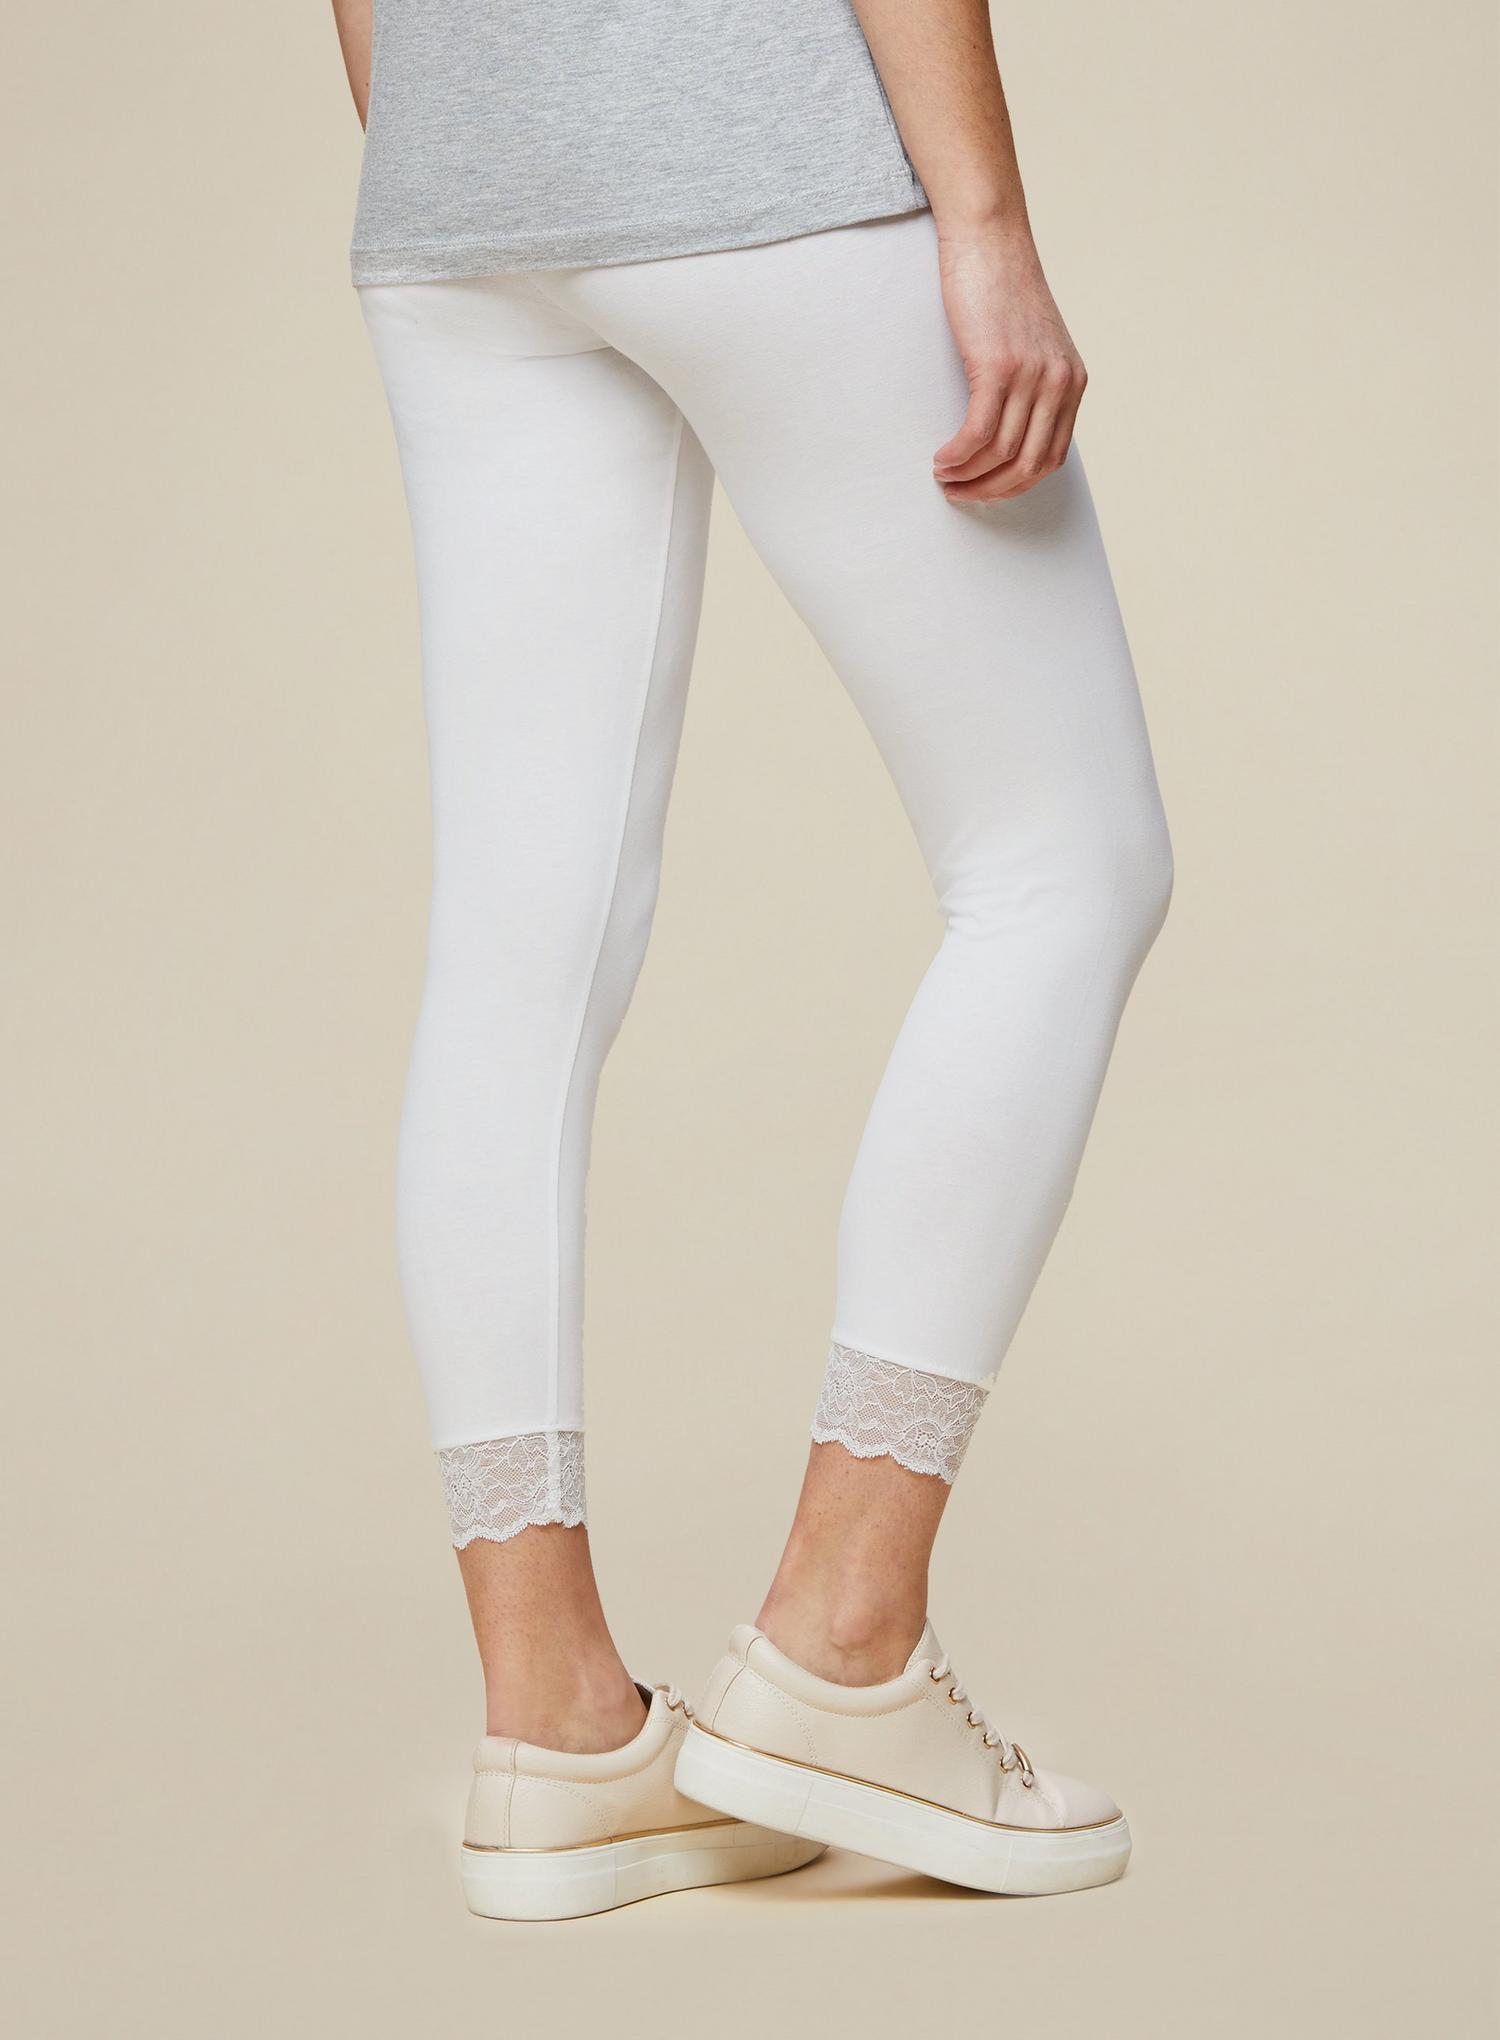 Capri Leggings Hem Lace Trim 3/4 Length Thin Cotton/Spandex Leggings S-3X  (Heather Grey, Small) at  Women's Clothing store